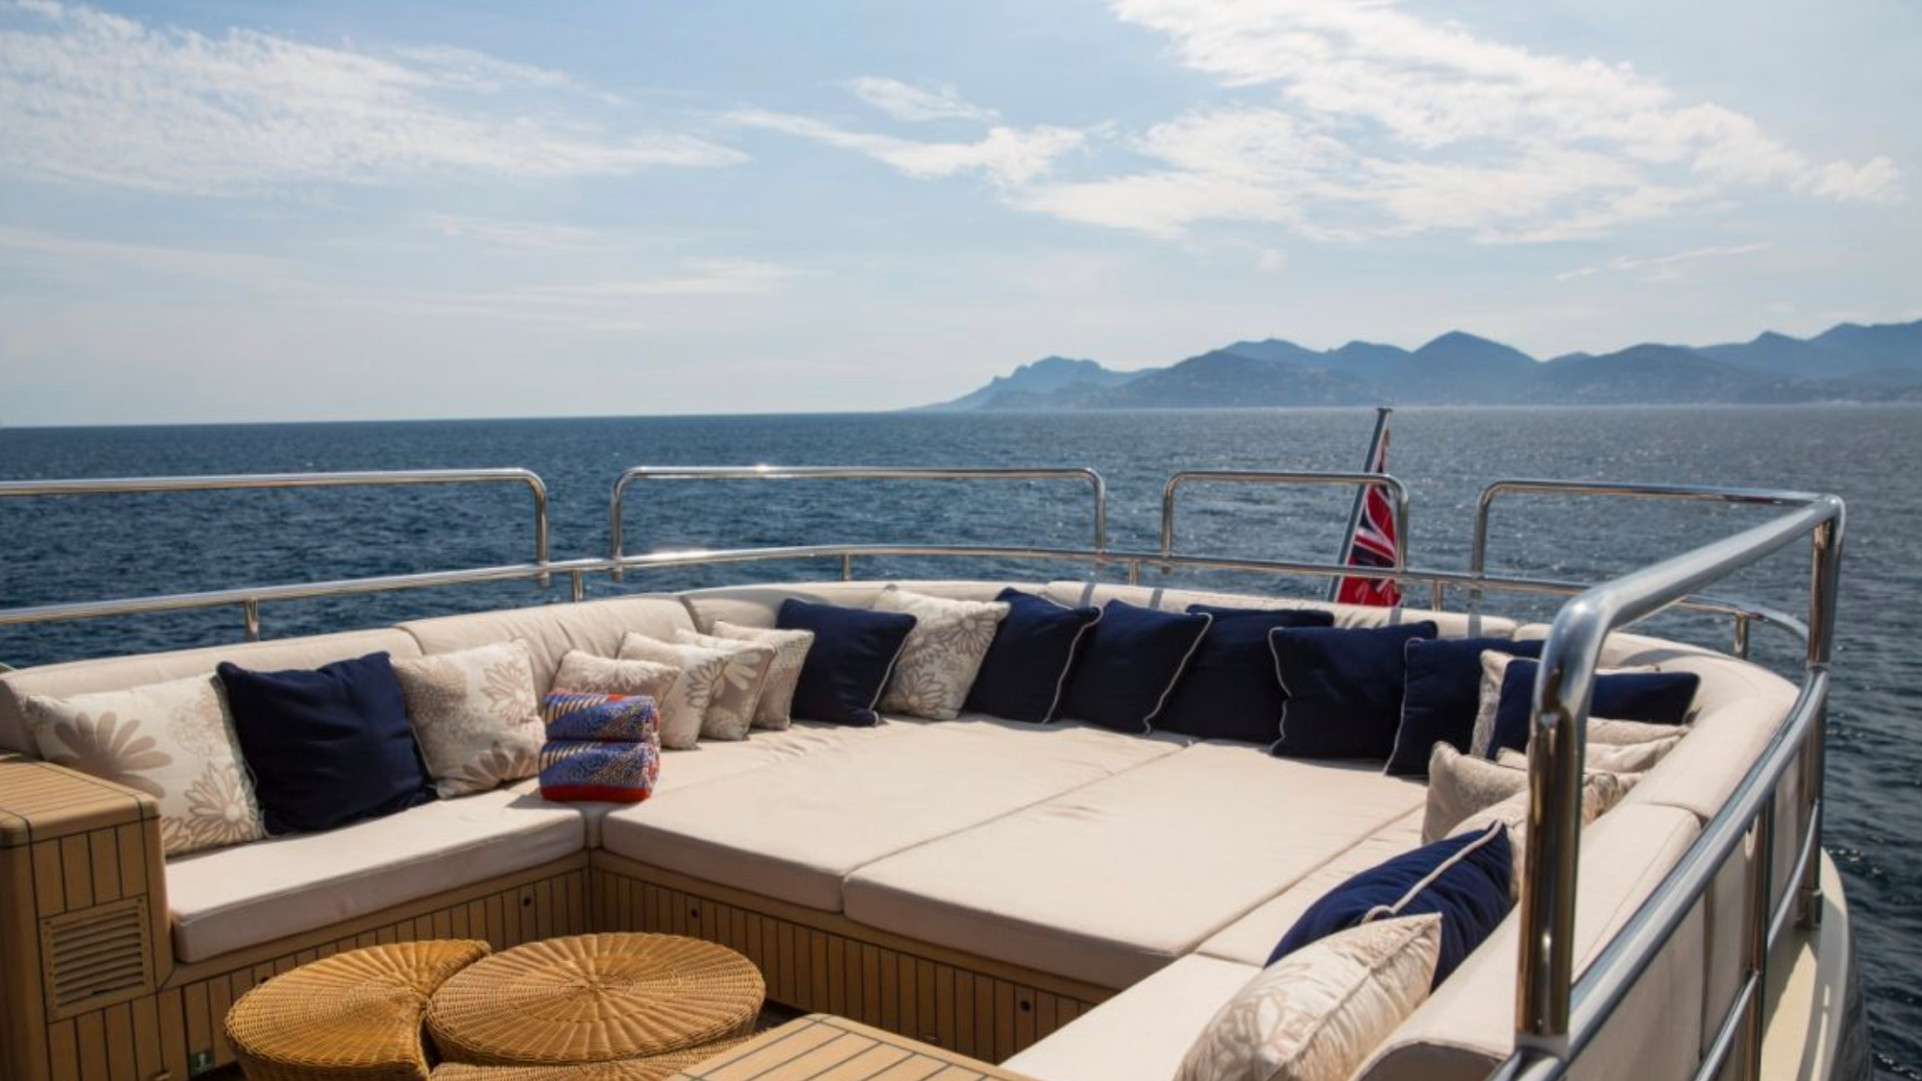 YCM 120 - Luxury yacht charter St Lucia & Boat hire in Riviera, Corsica, Sardinia, Spain, Balearics, Caribbean 5